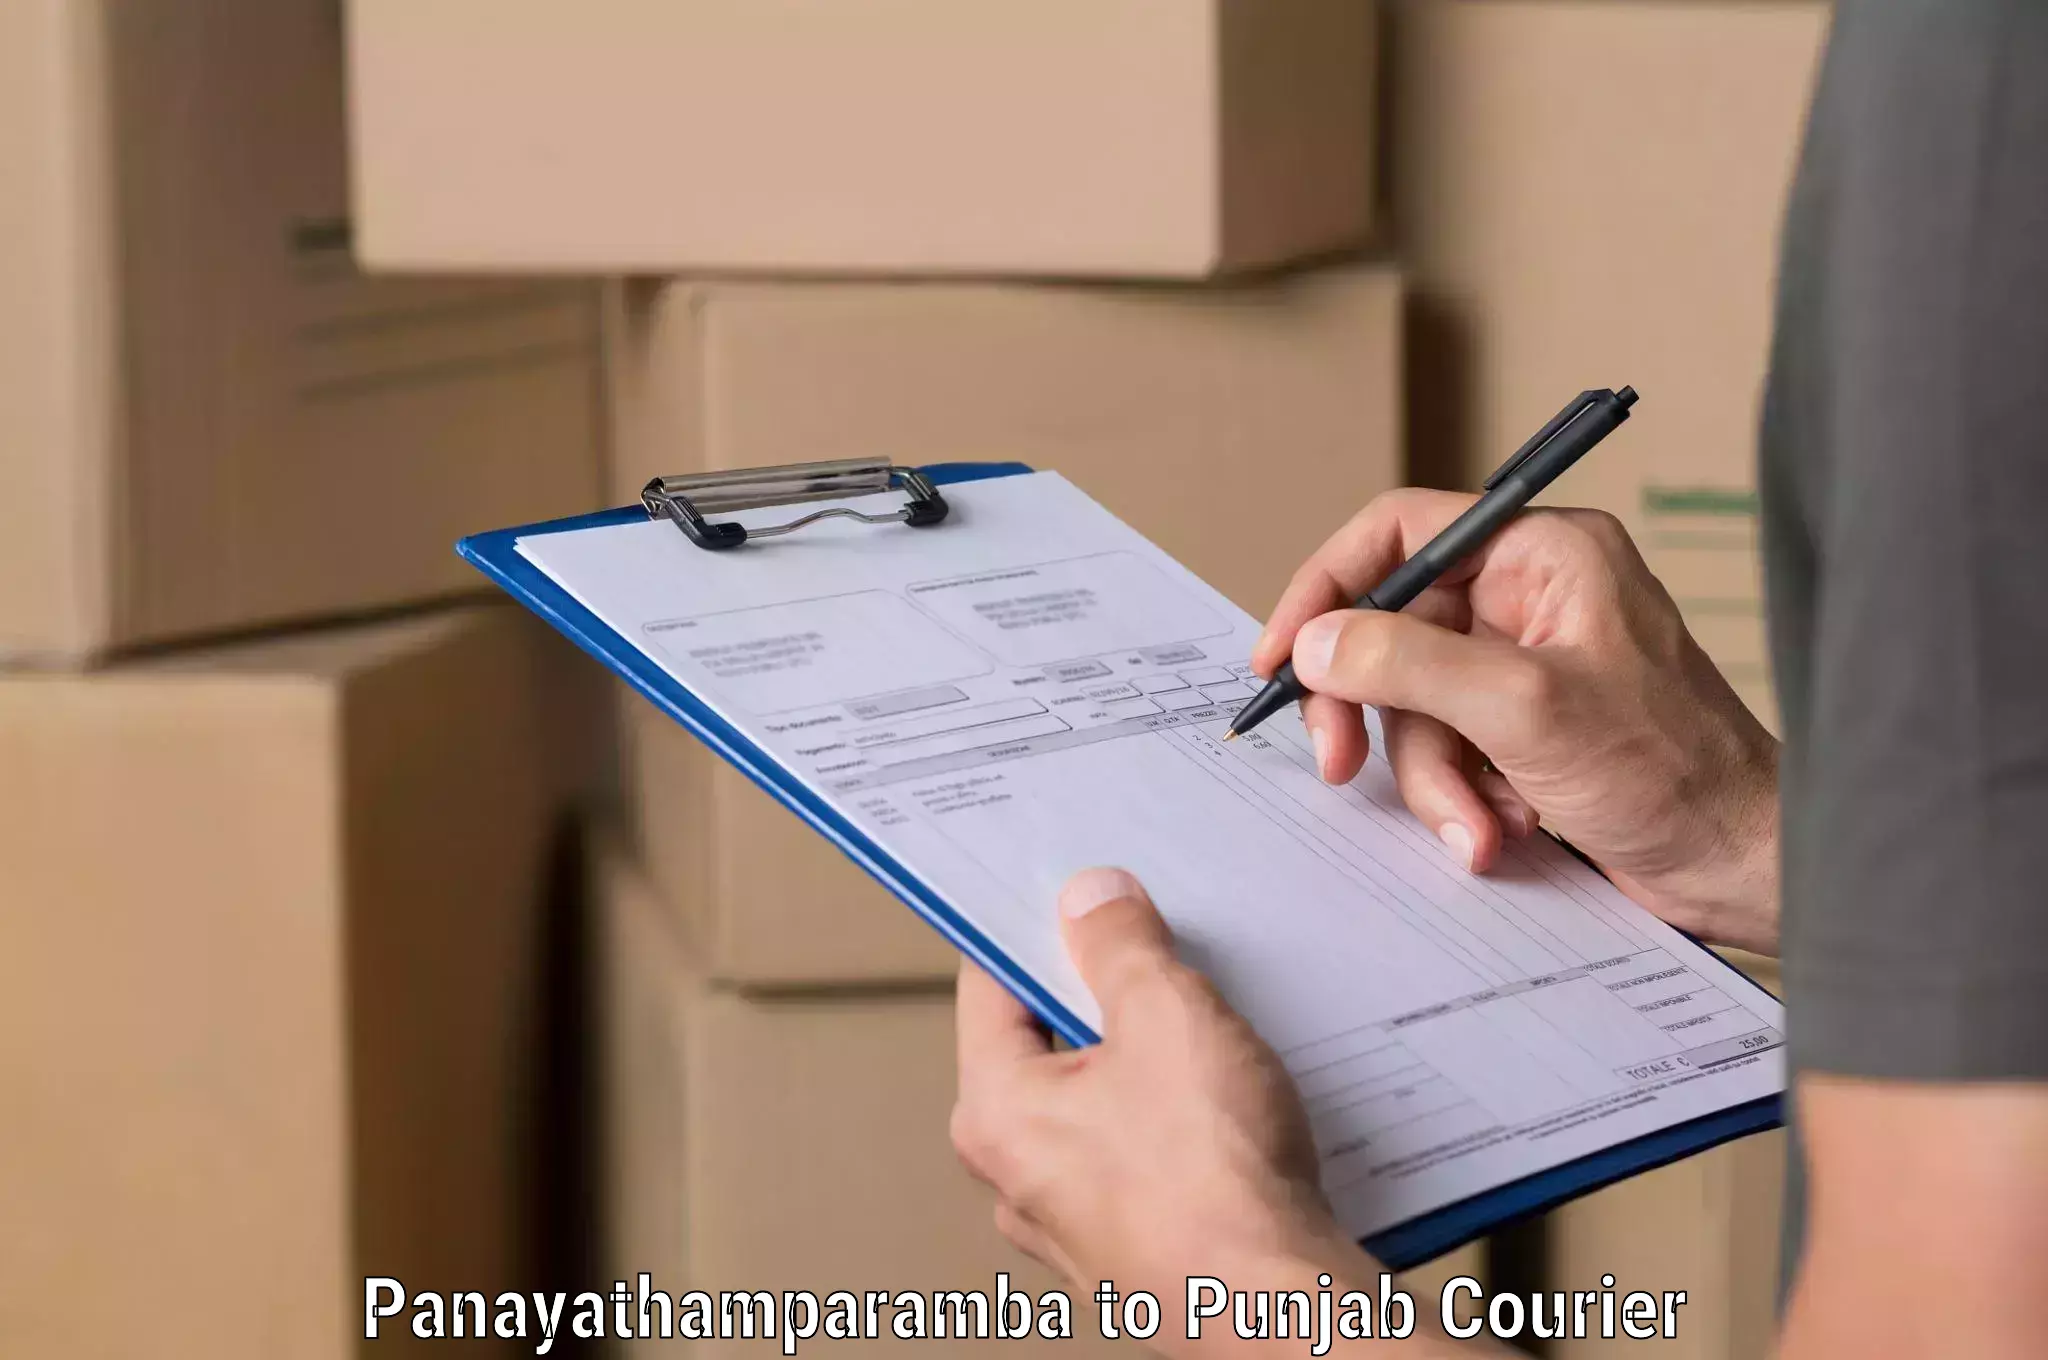 Comprehensive delivery network Panayathamparamba to Punjab